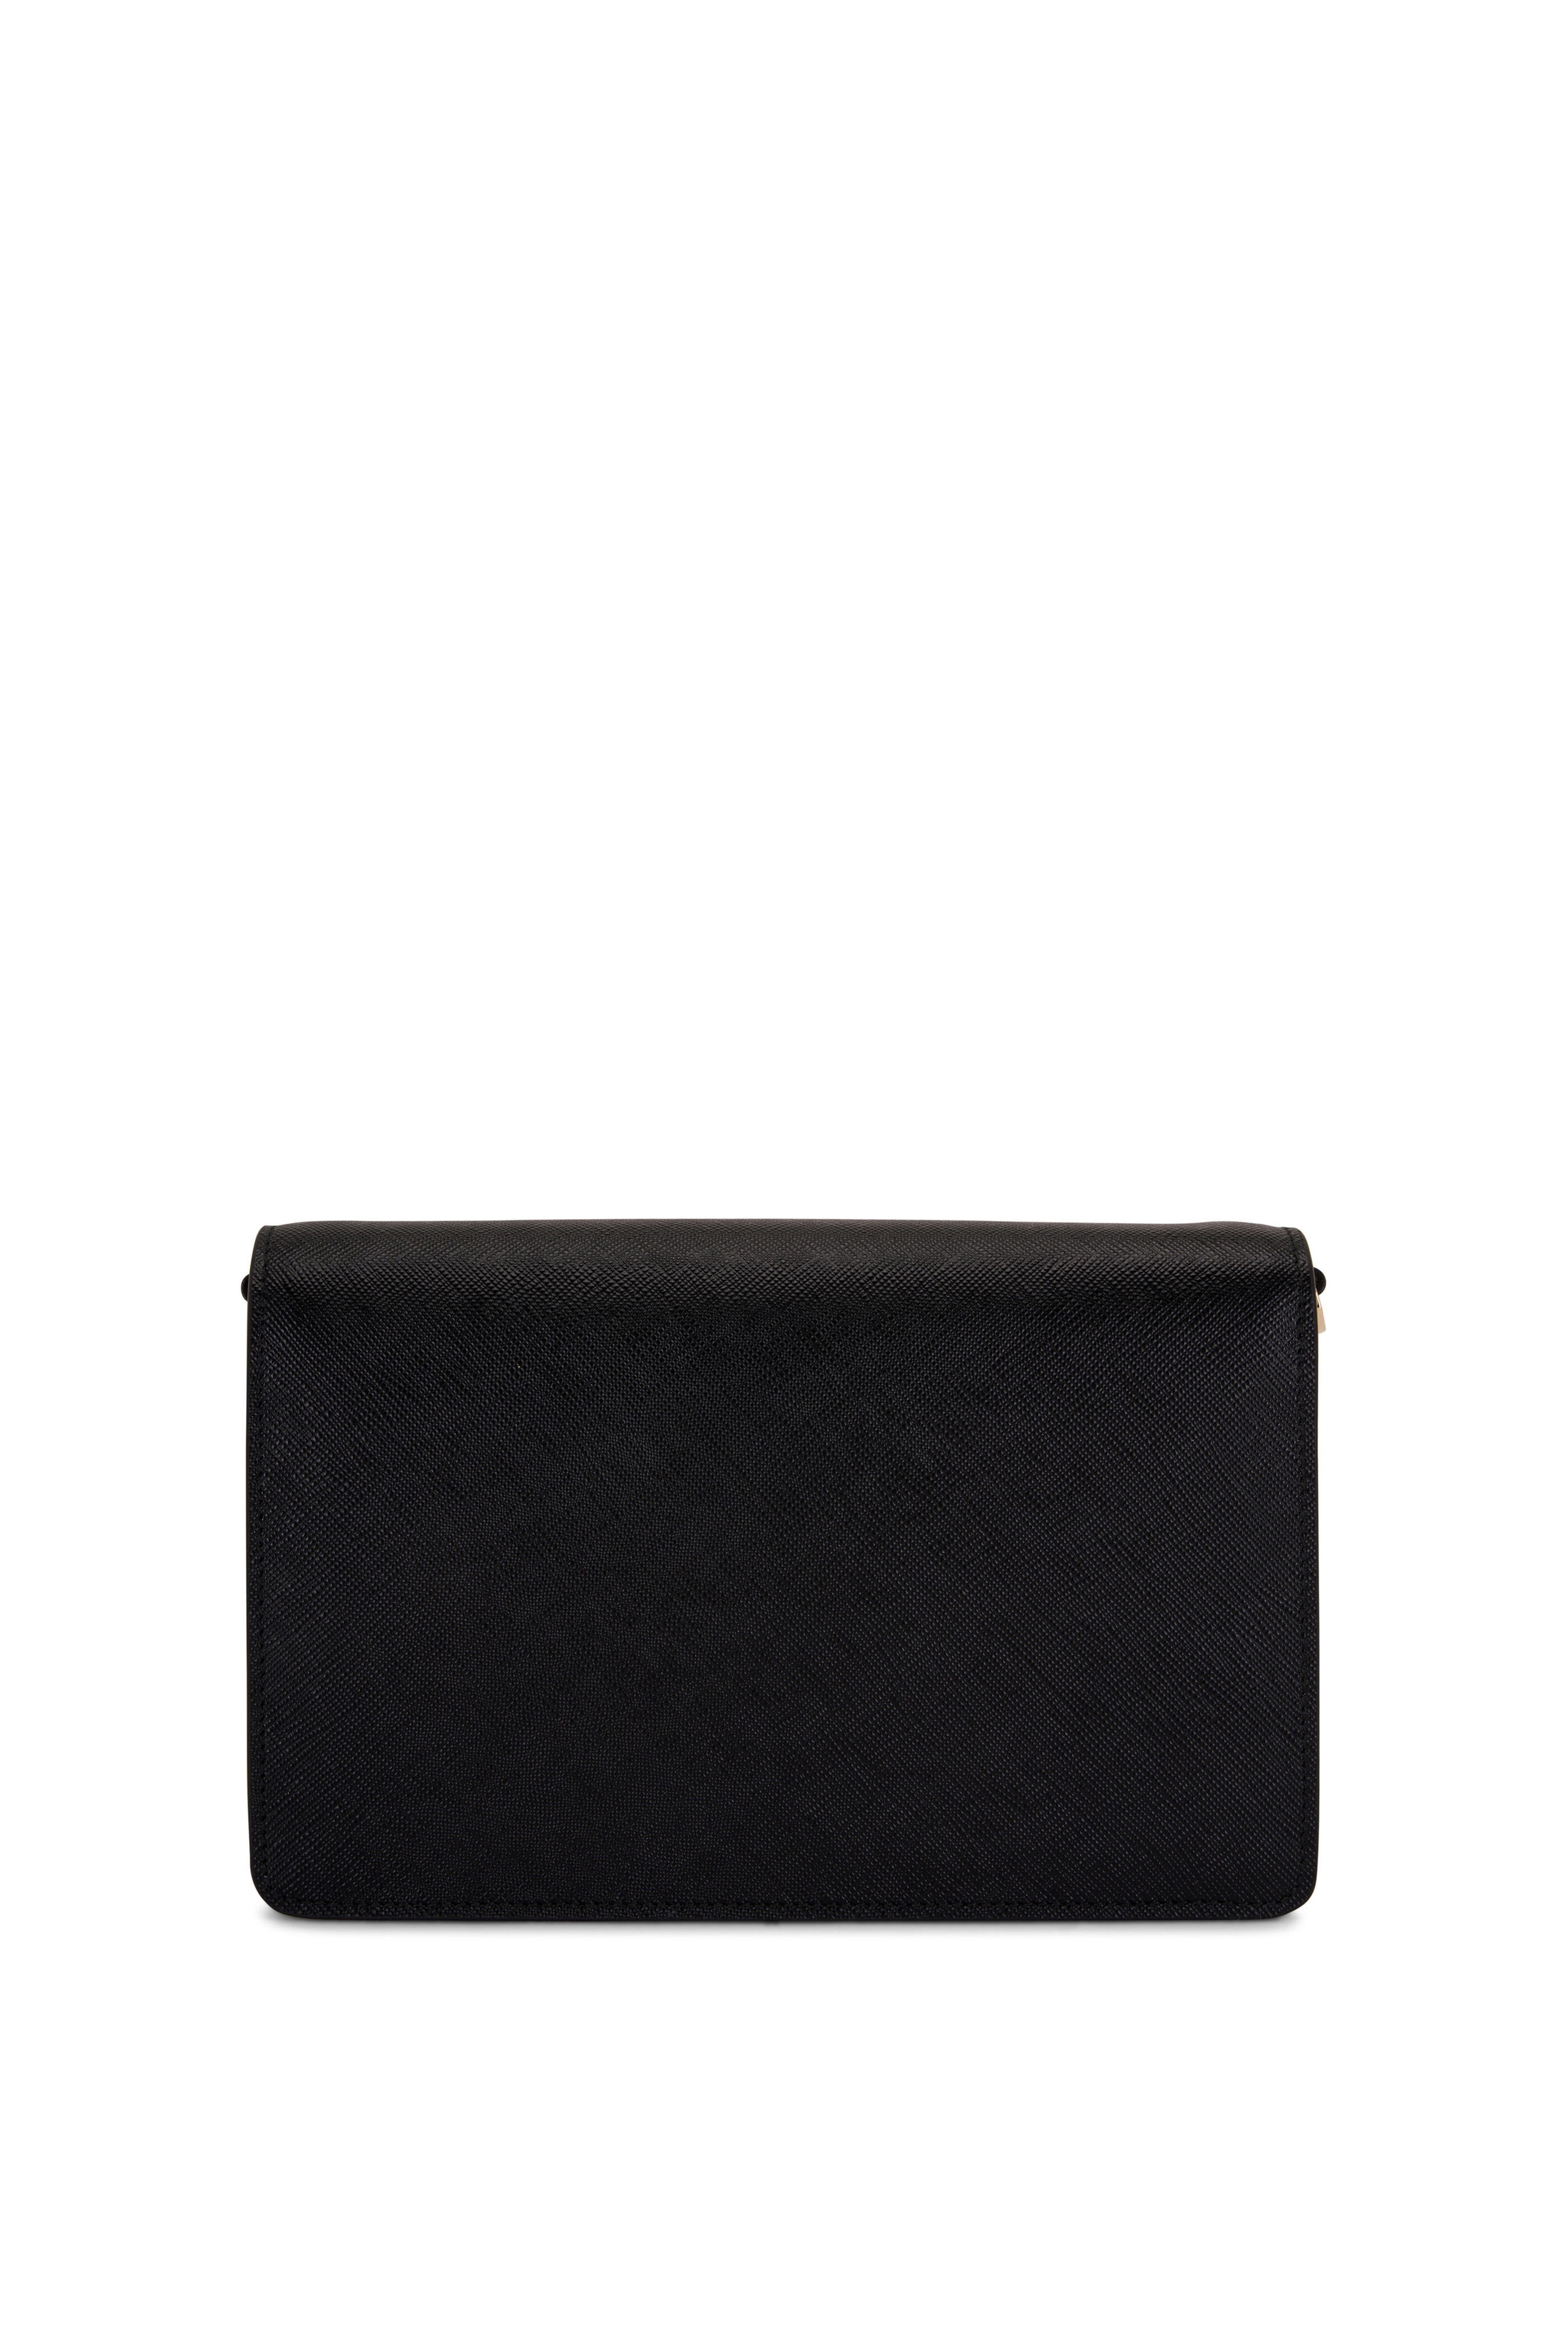 PRADA Saffiano Cuir Monochrome Chain Shoulder Bag Black 322506